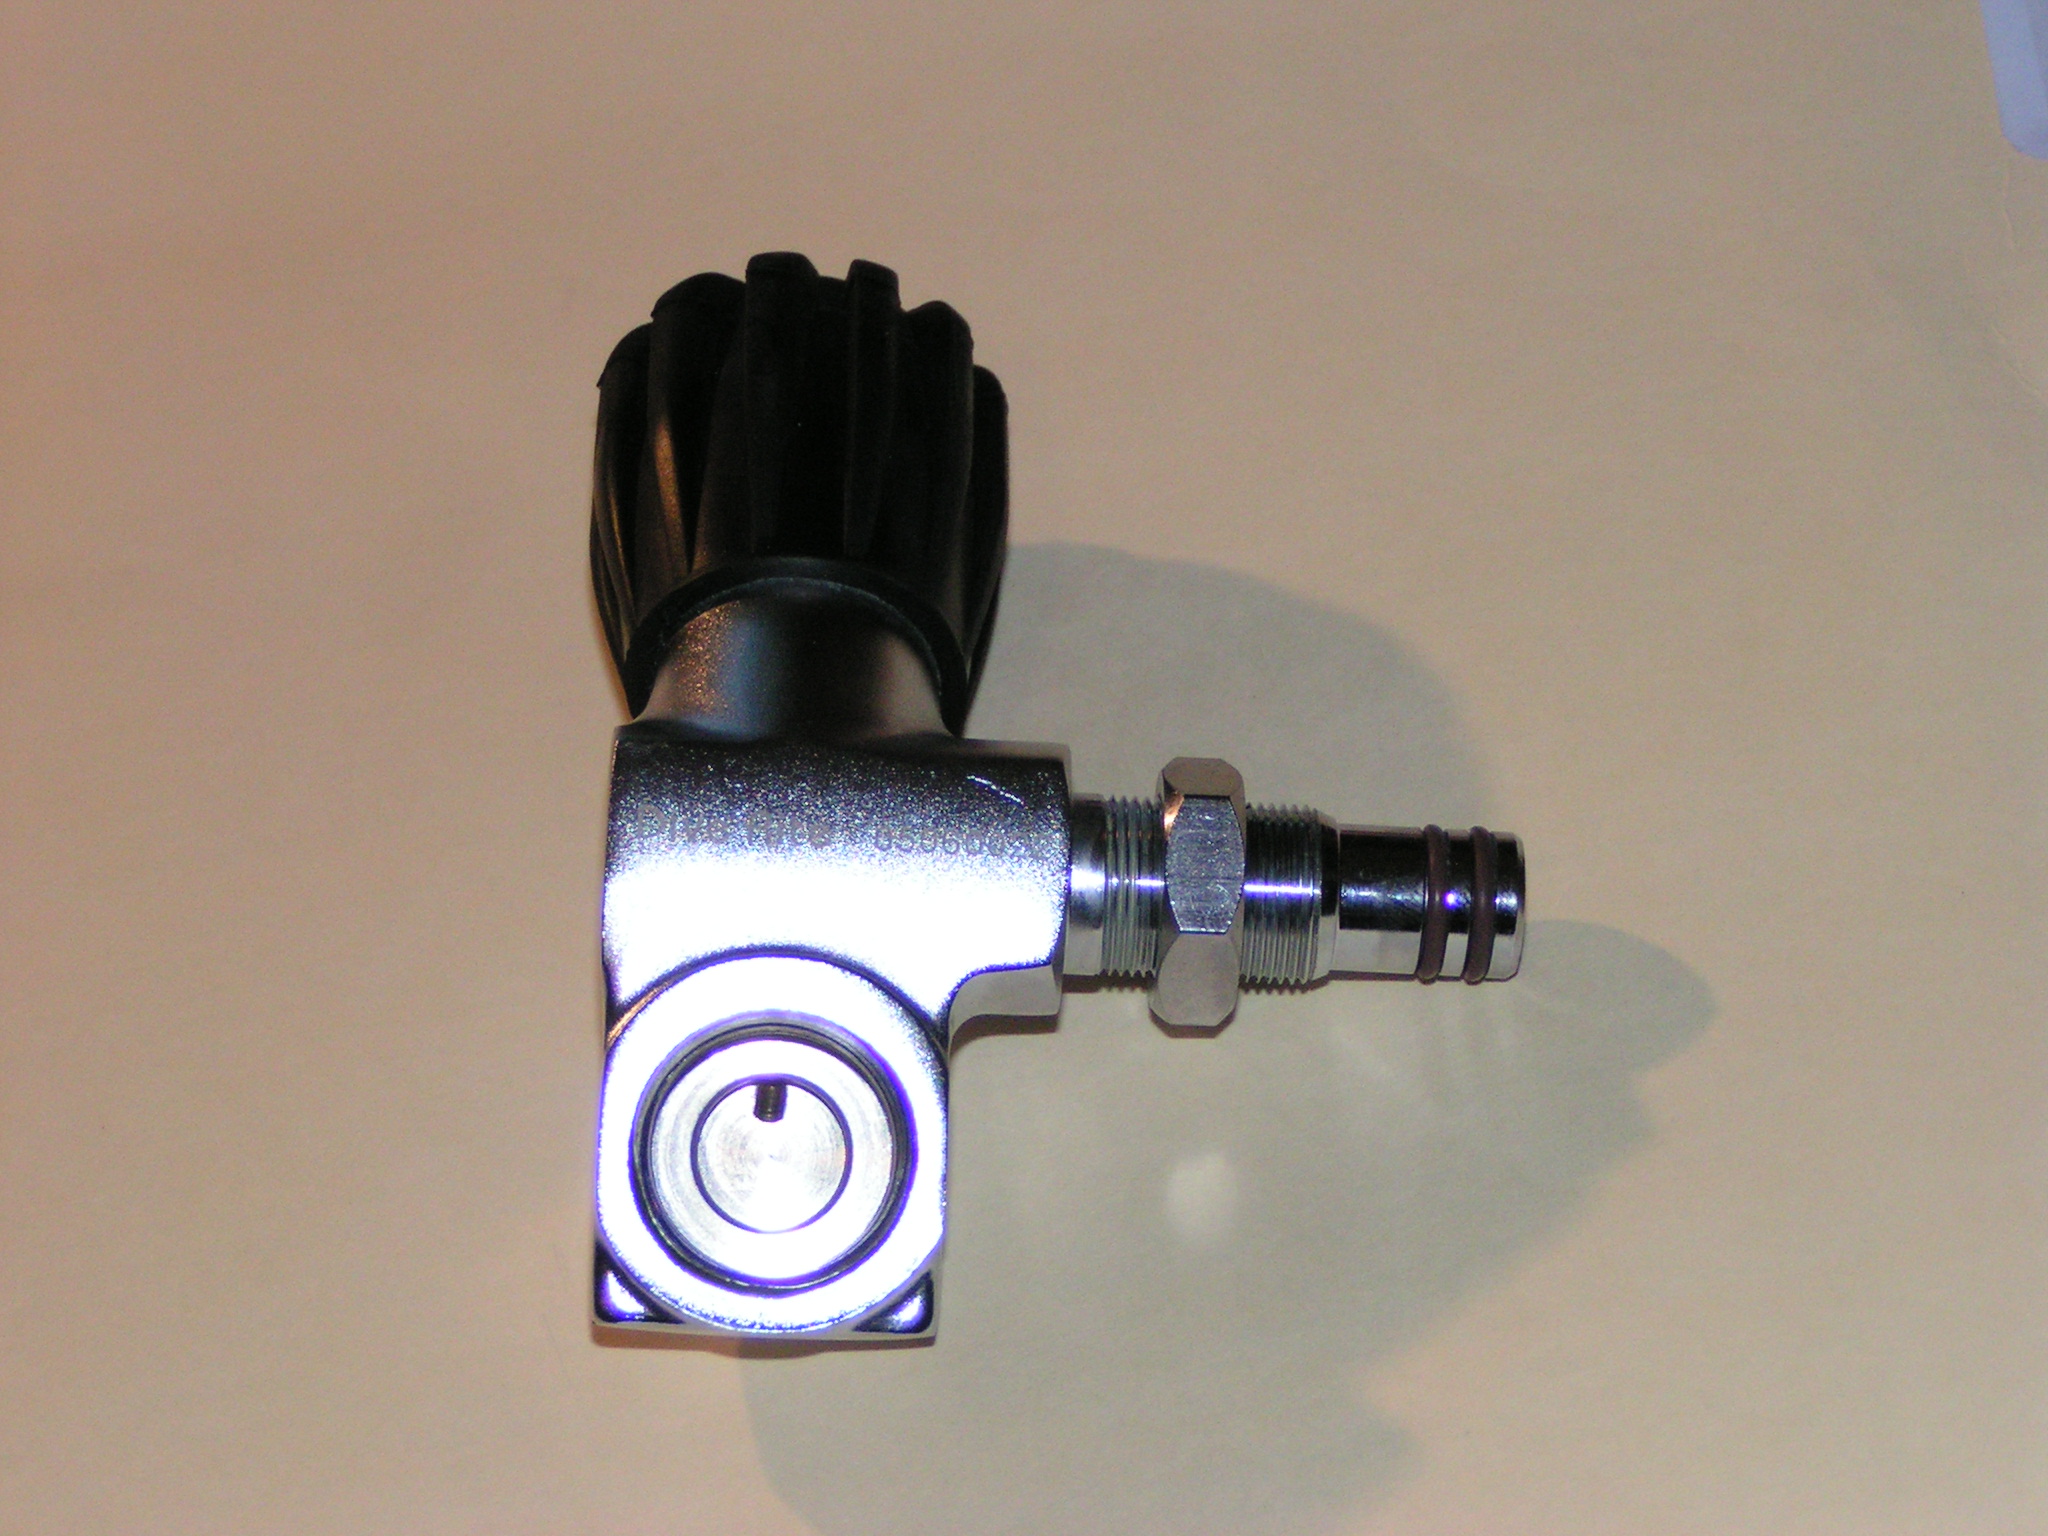 H valve adapter